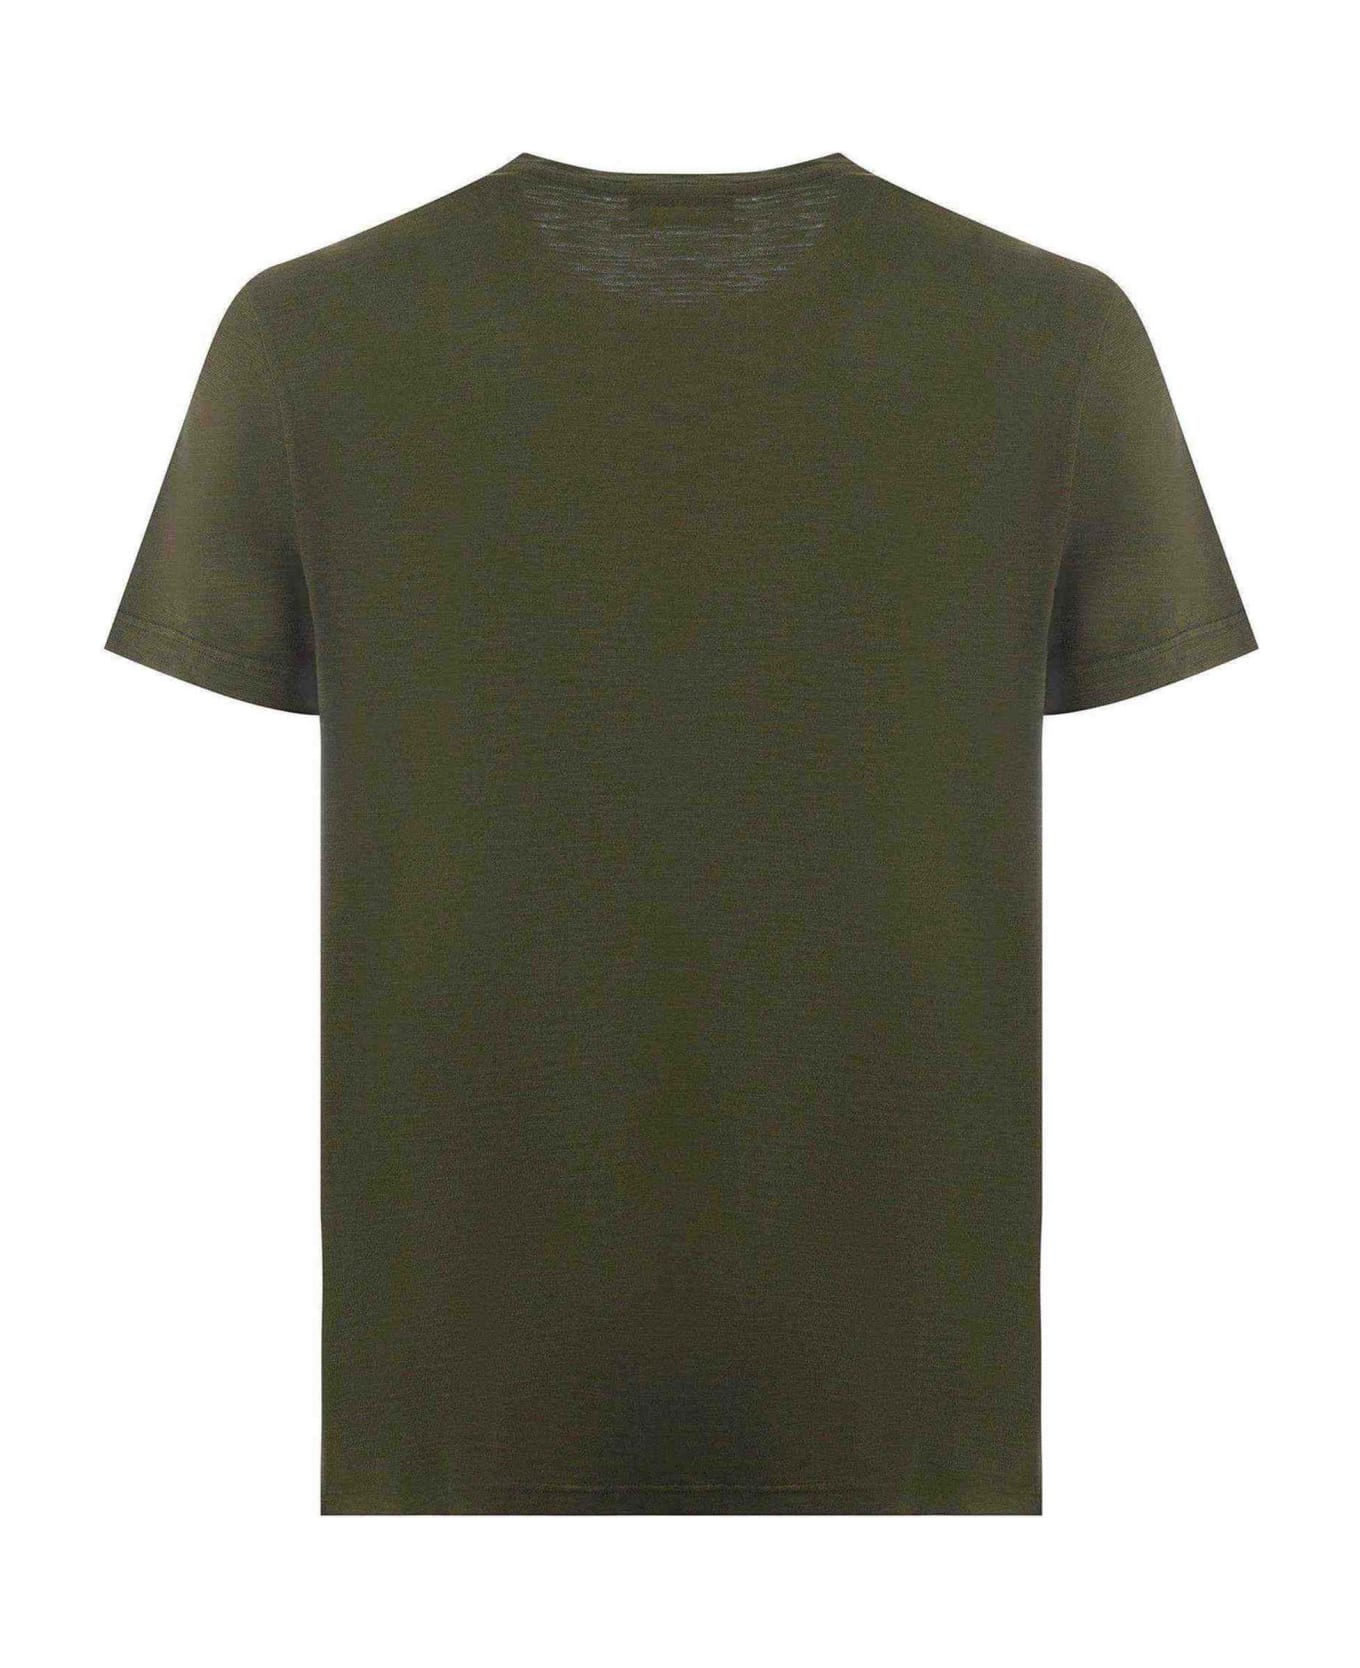 Dondup T-shirt - Verde militare